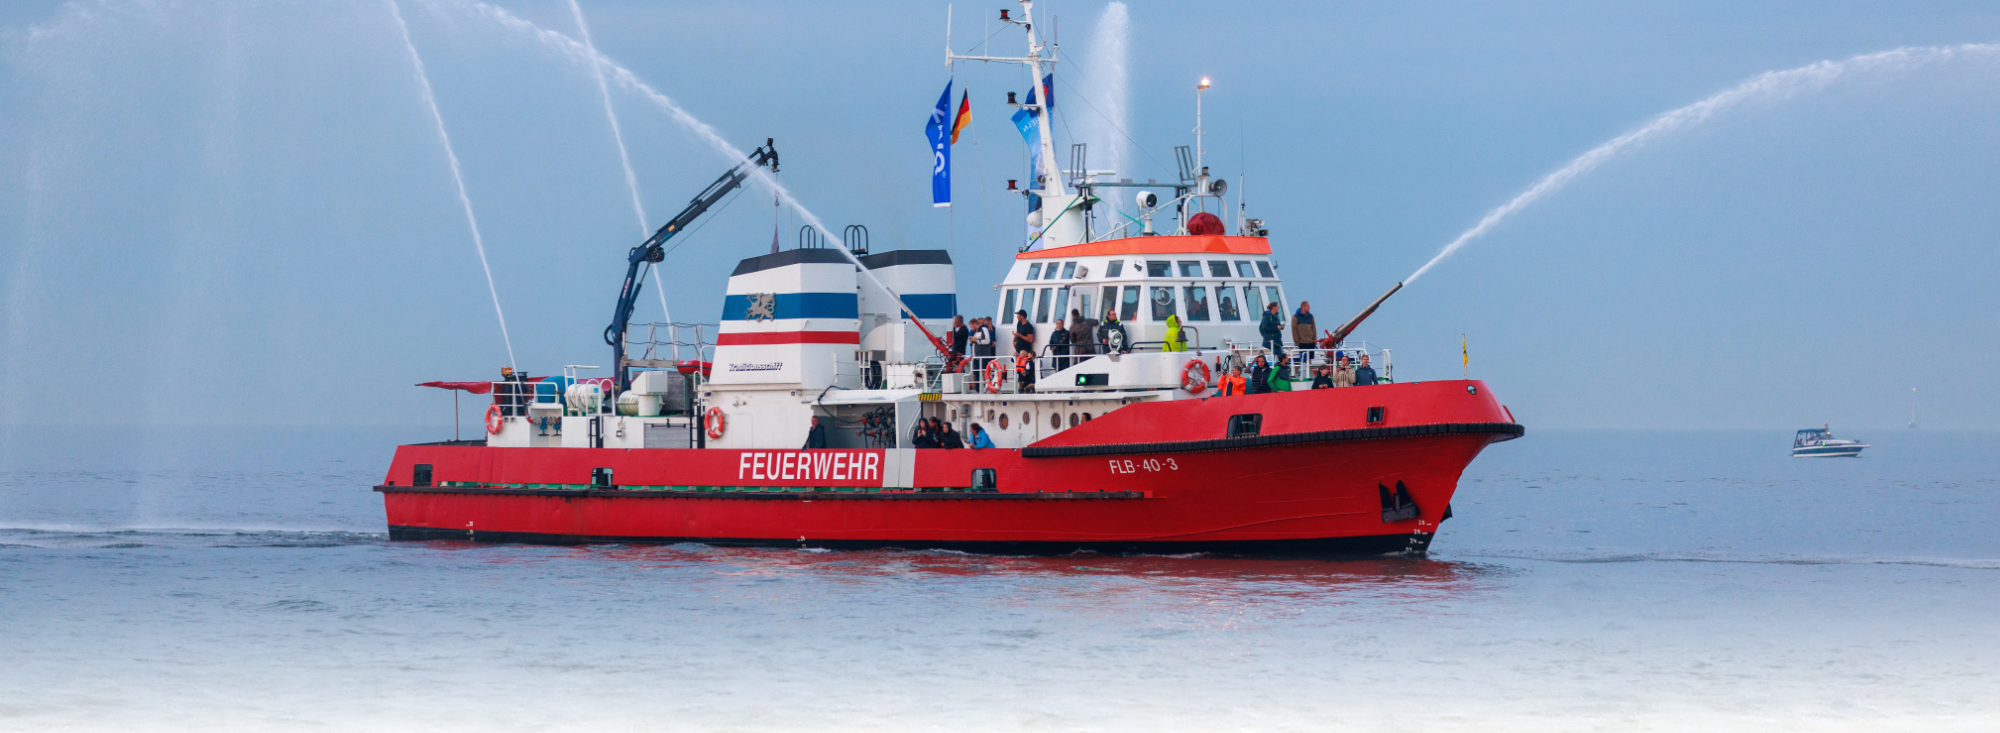 Feuerlöschboot FLB 40-3, Rostock, Warnemünde, Ostsee